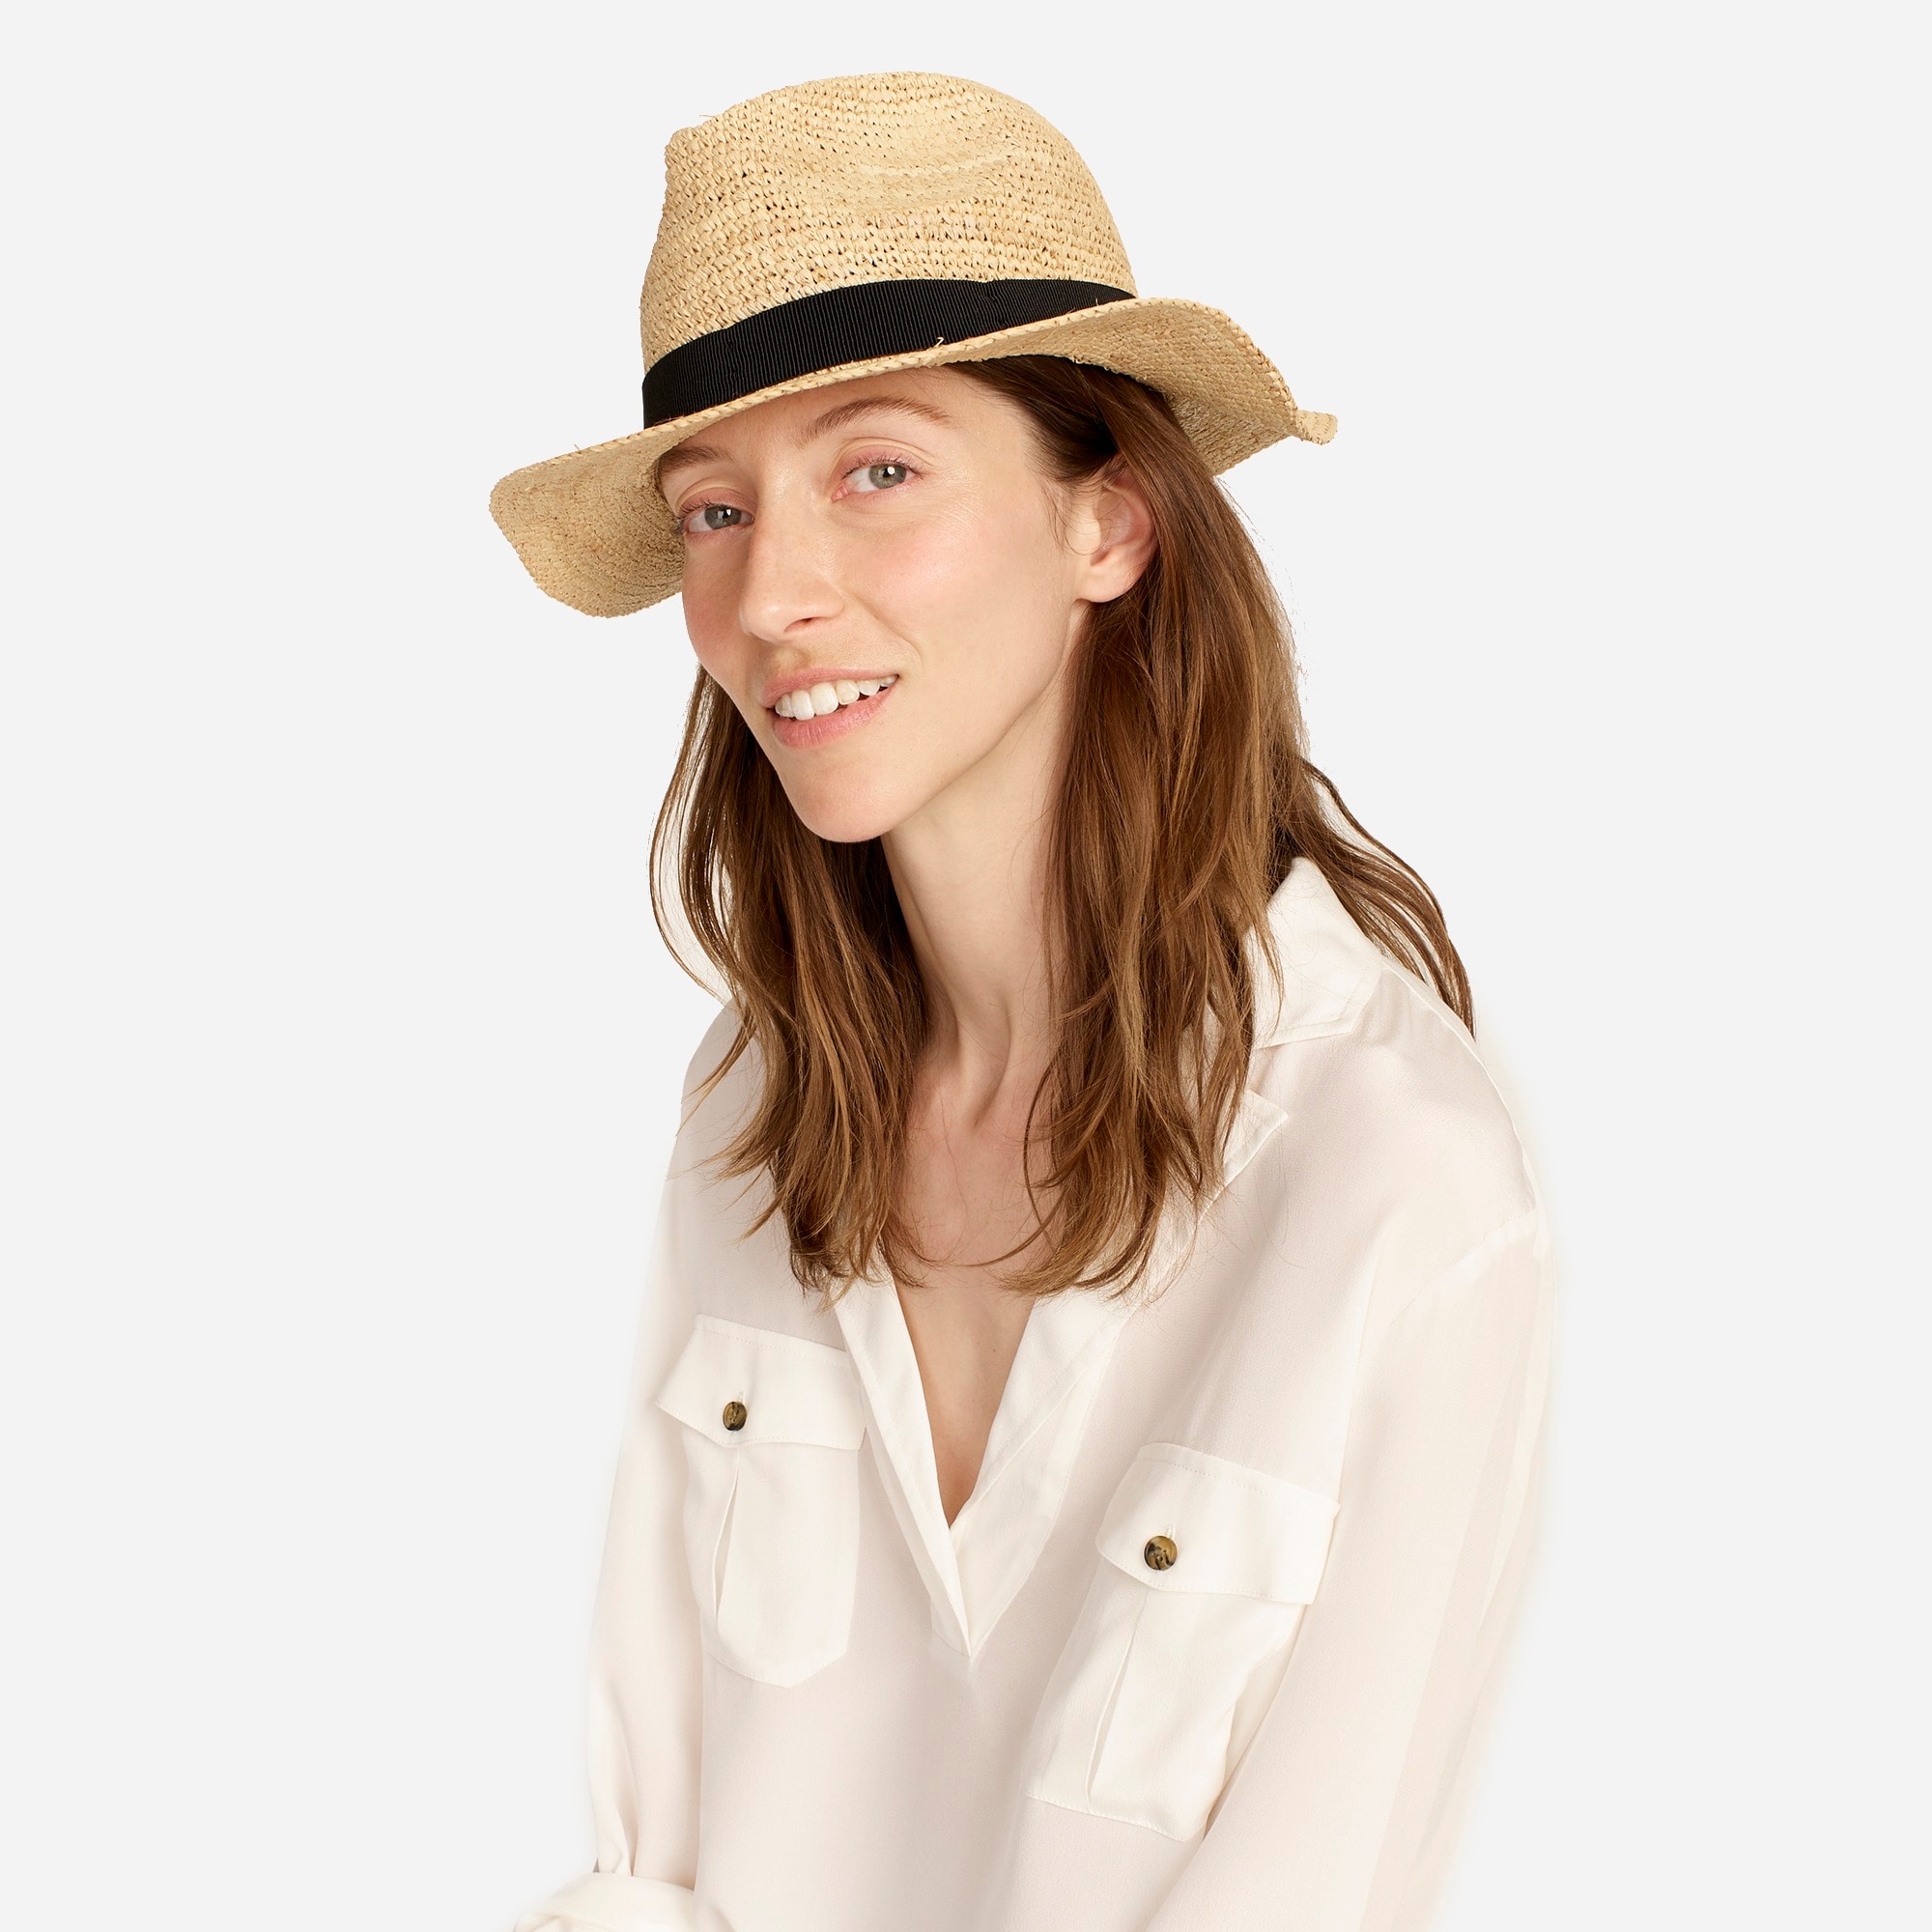 J.Crew Women's Packable Straw Hat (Size Small-Medium)